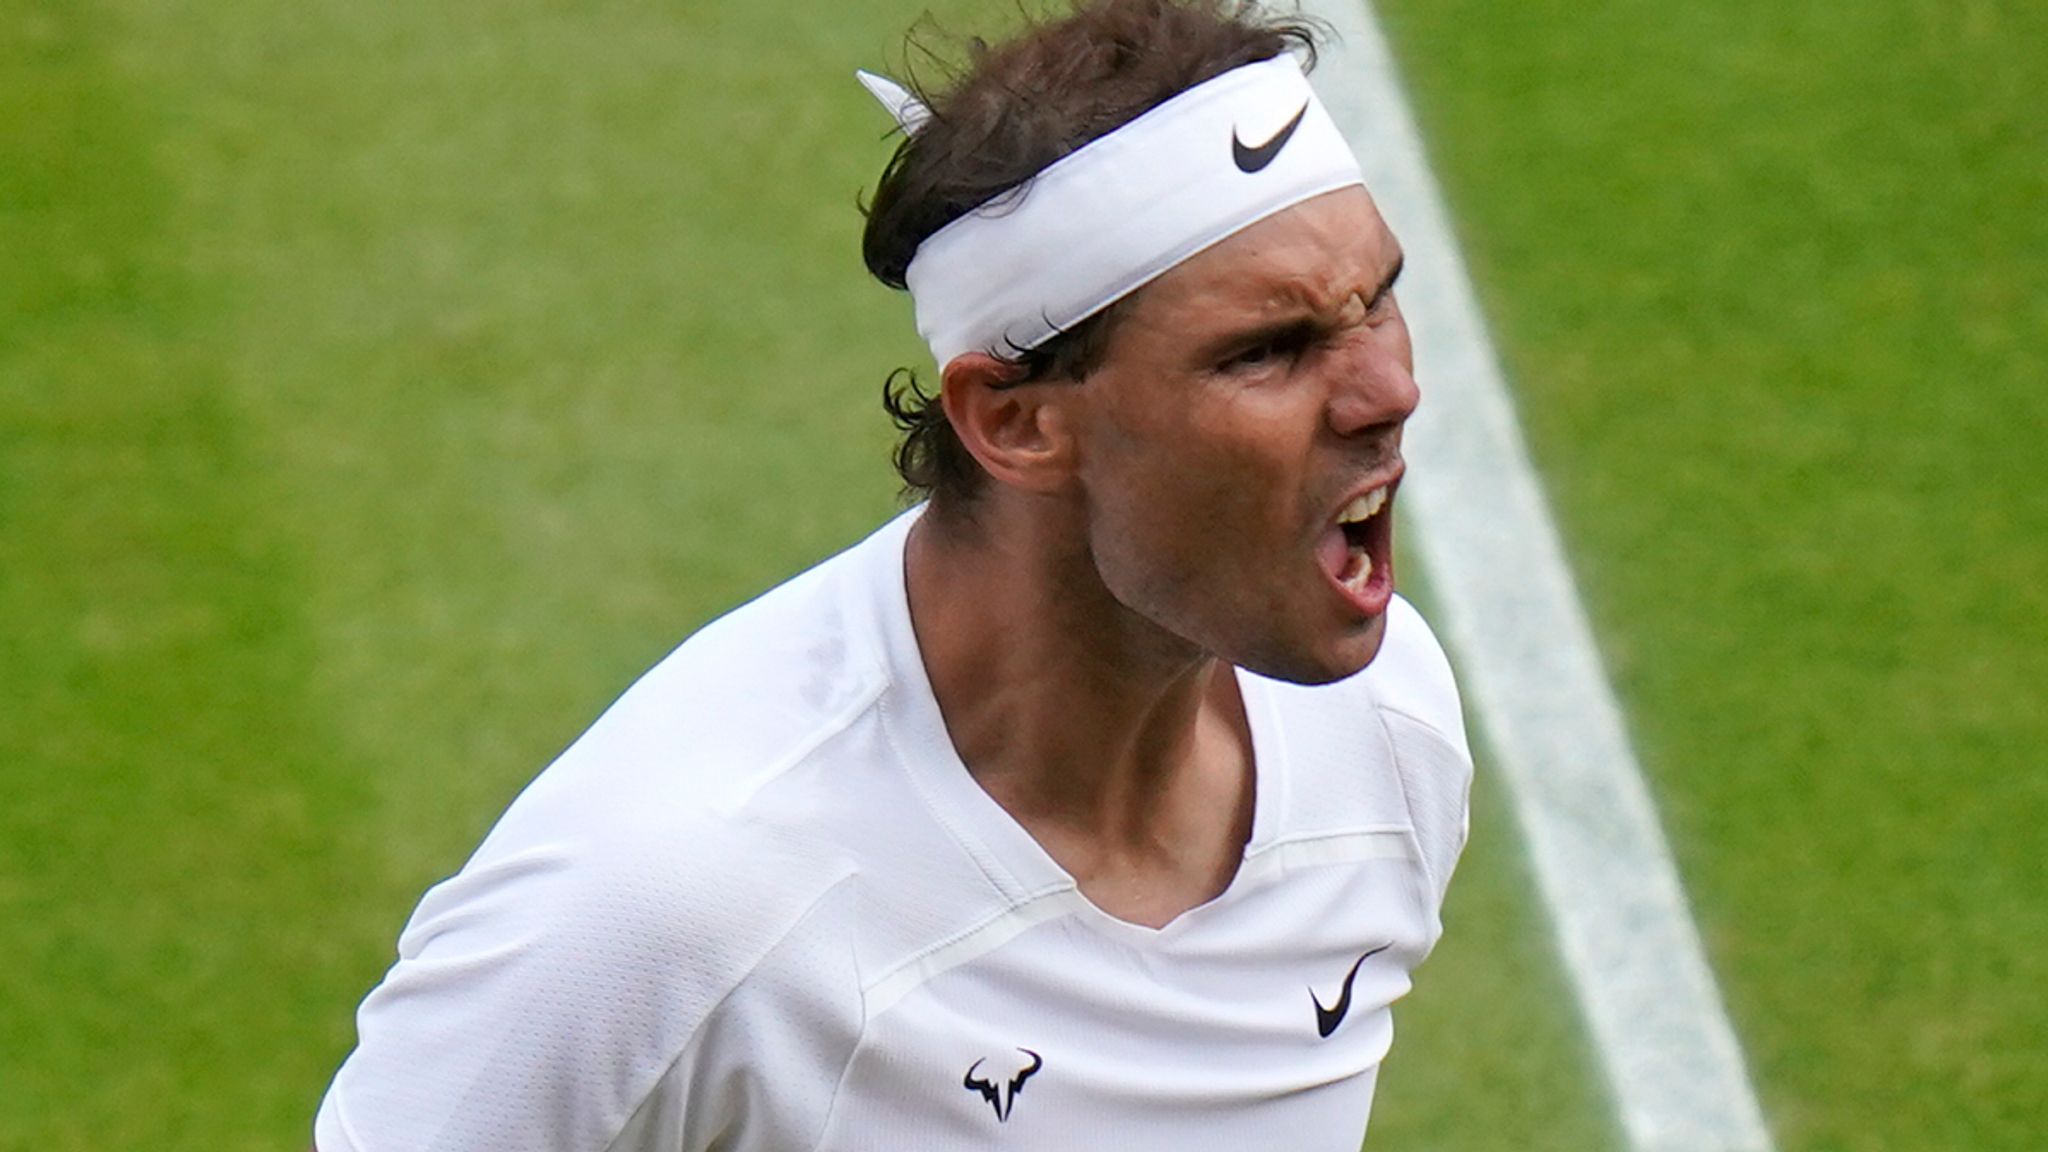 Wimbledon Rafael Nadal overcomes injury to beat Taylor Fritz in five-set quarter-final thriller Tennis News Sky Sports